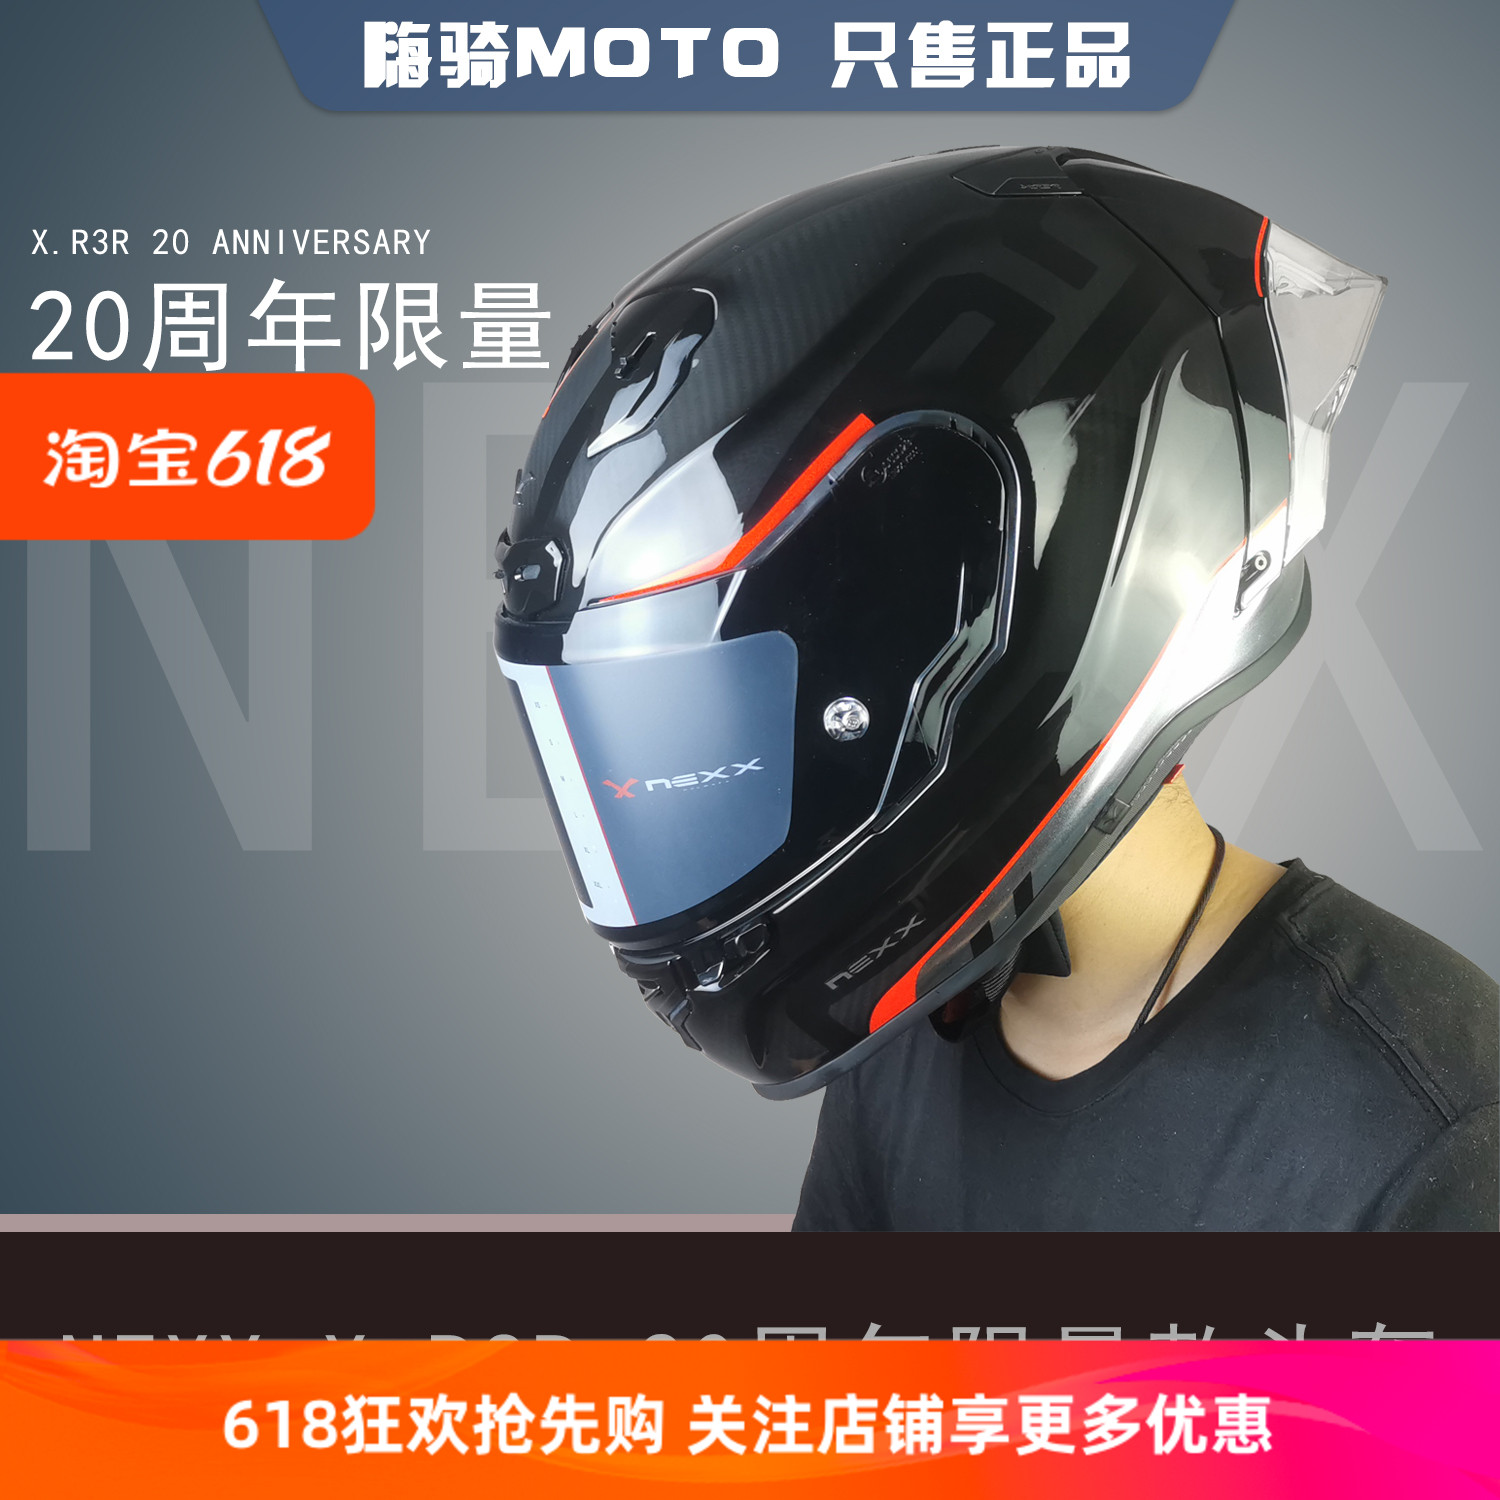 NEXX X.R3R 20周年碳纤维限量款机车赛道防摔骑士黑红大尾翼头盔